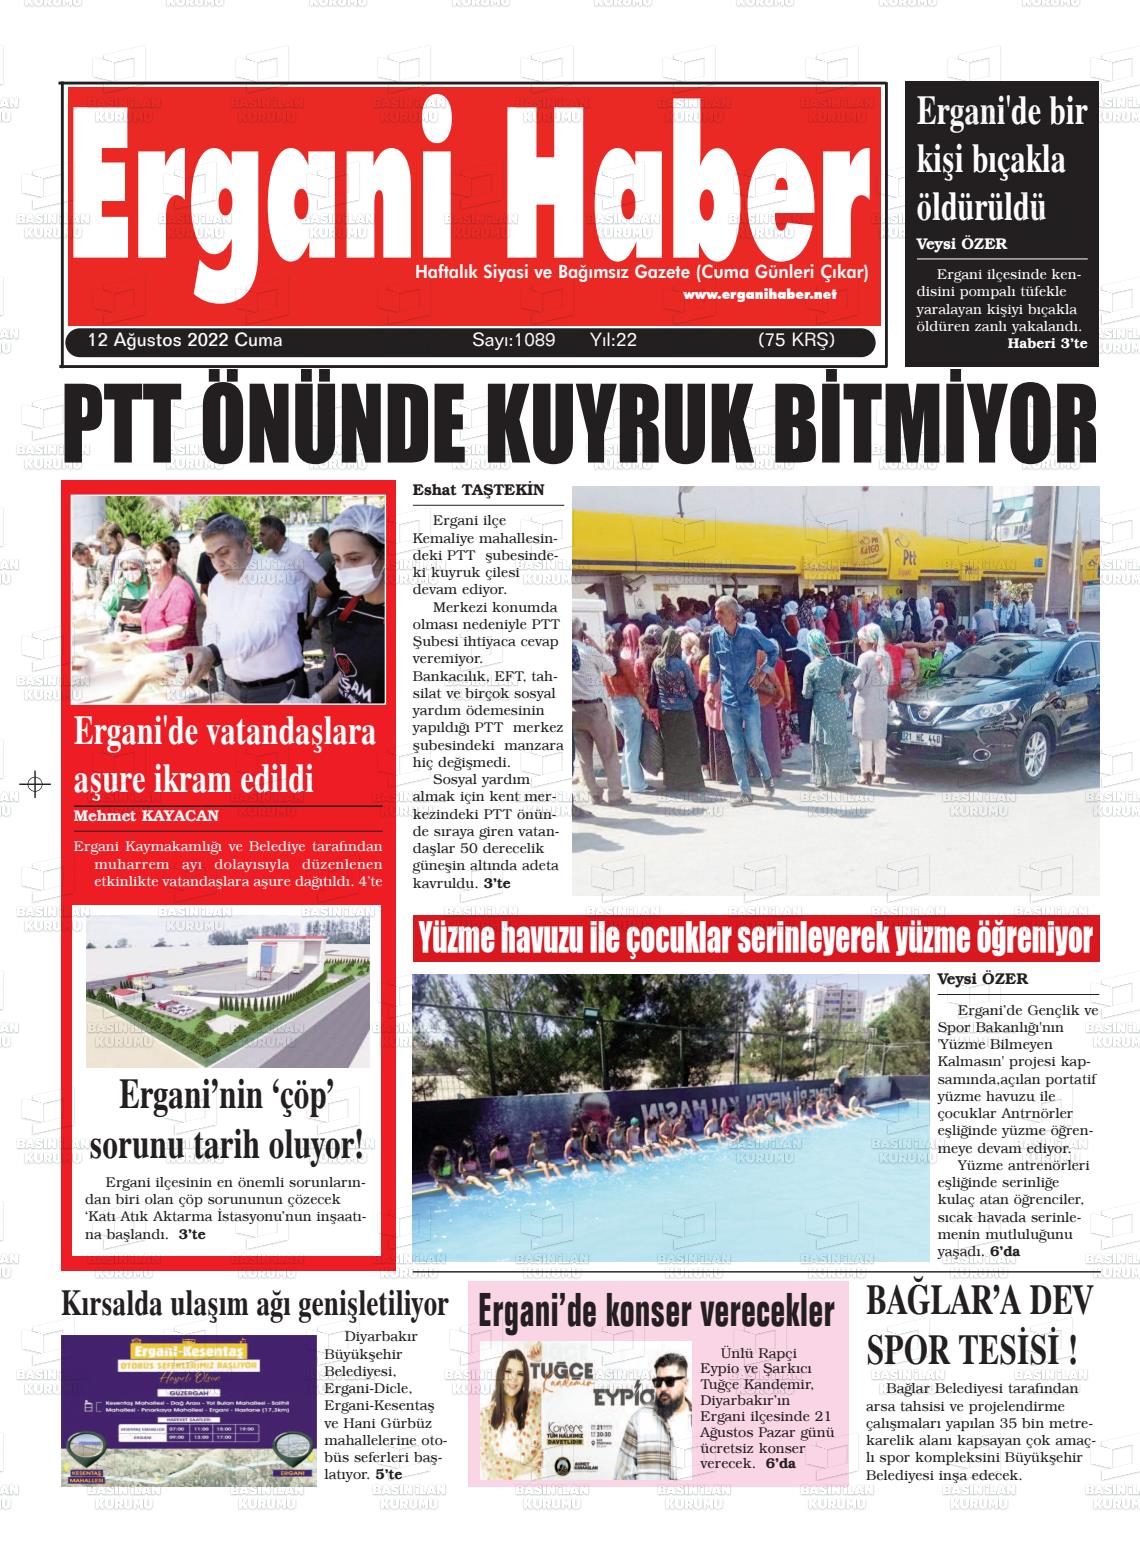 12 Ağustos 2022 Ergani Haber Gazete Manşeti